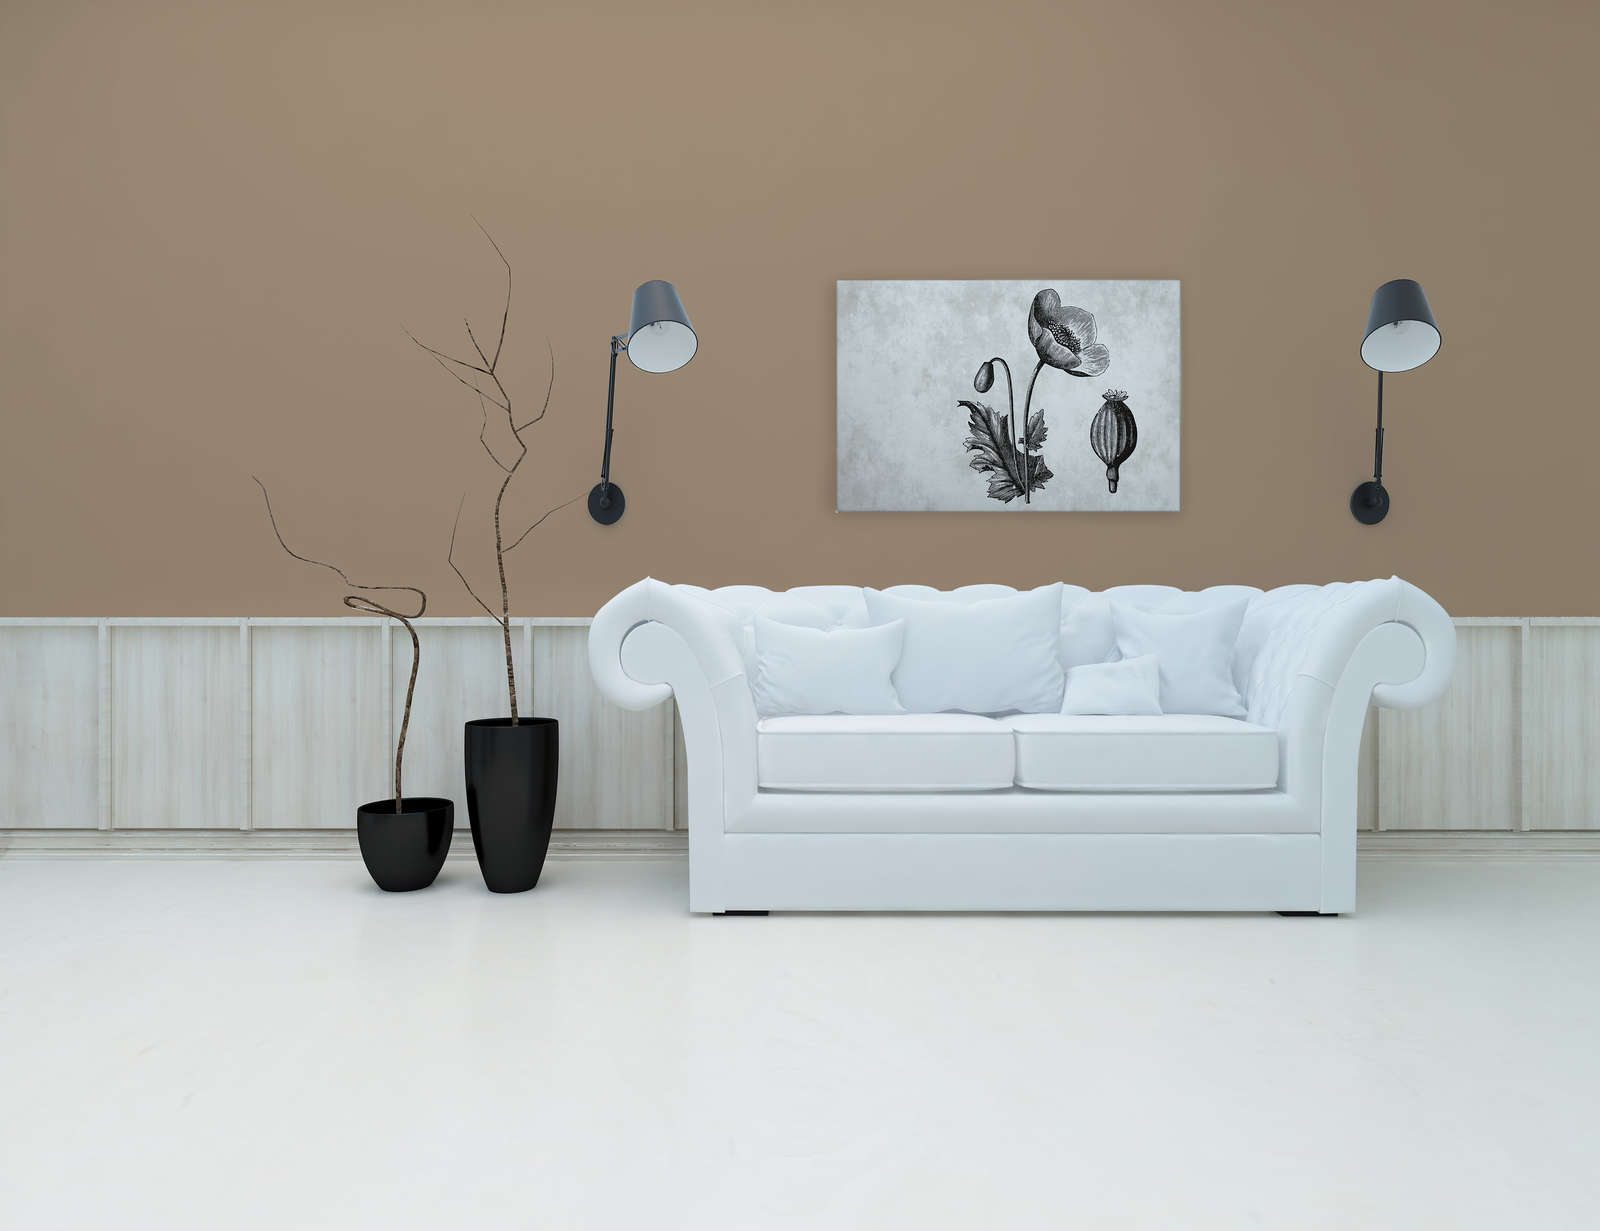             Black and White Canvas Poppy Botanical Style - 0.90 m x 0.60 m
        